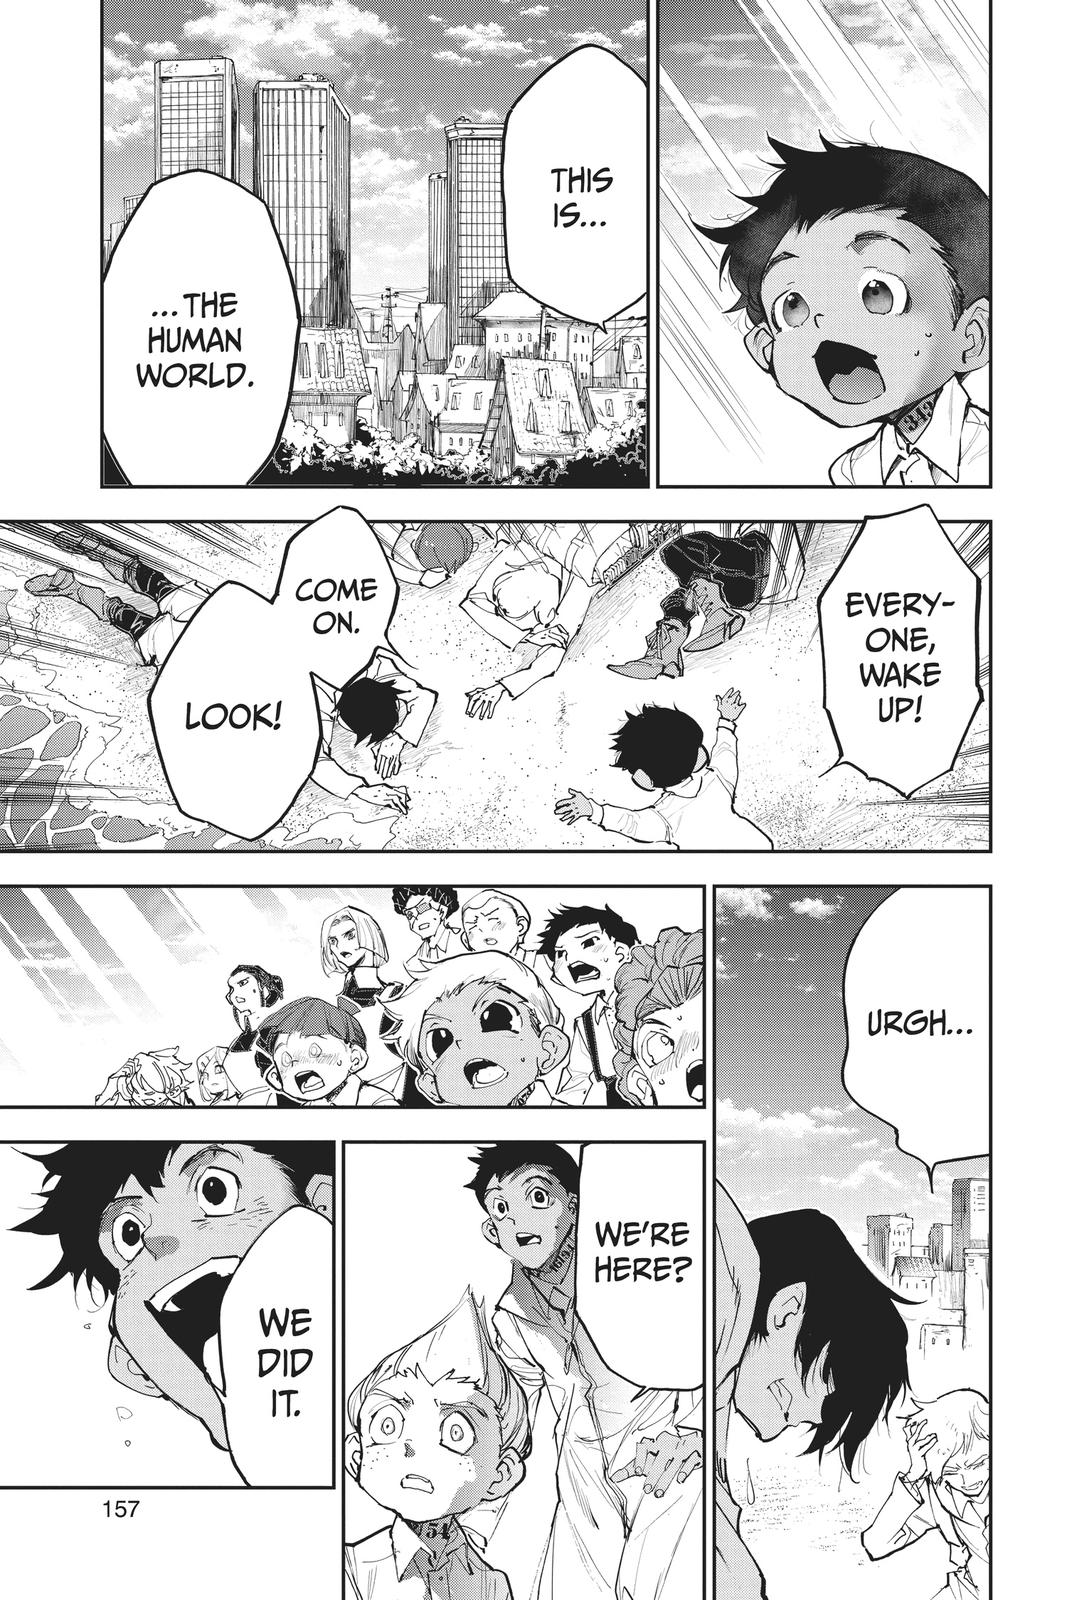 the promised neverland manga panel] in 2023